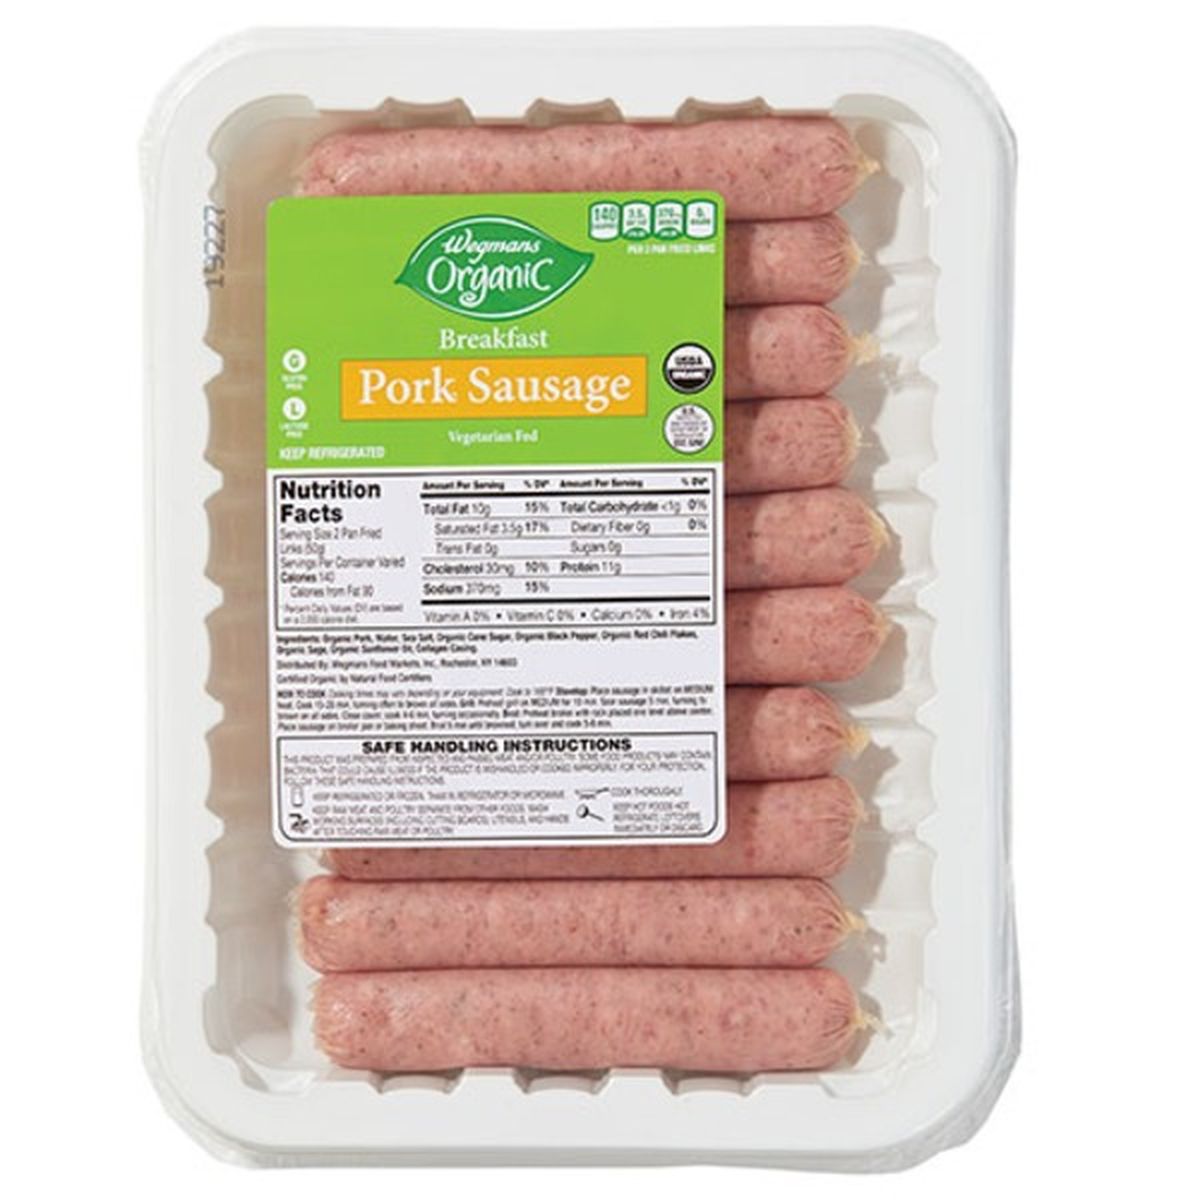 Calories in Wegmans Organic Breakfast Pork Sausage